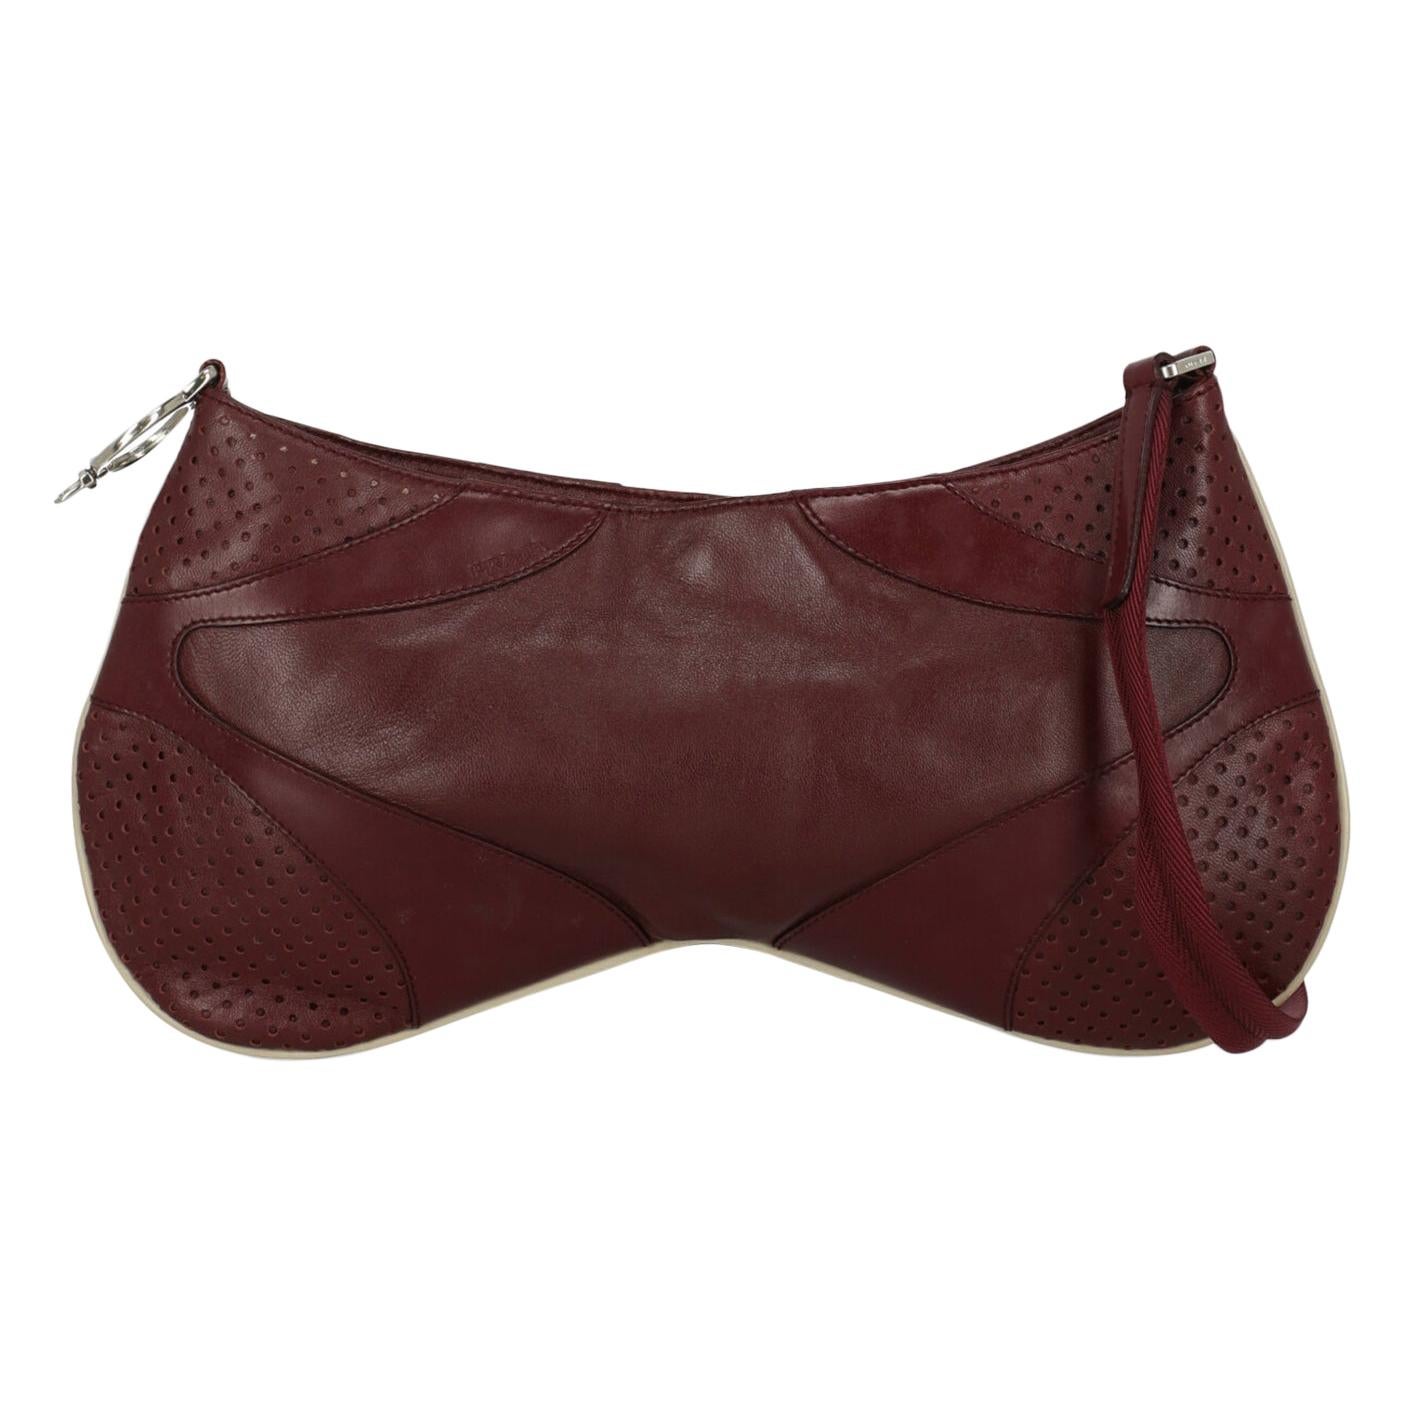 Prada Woman Shoulder bag Burgundy Leather For Sale